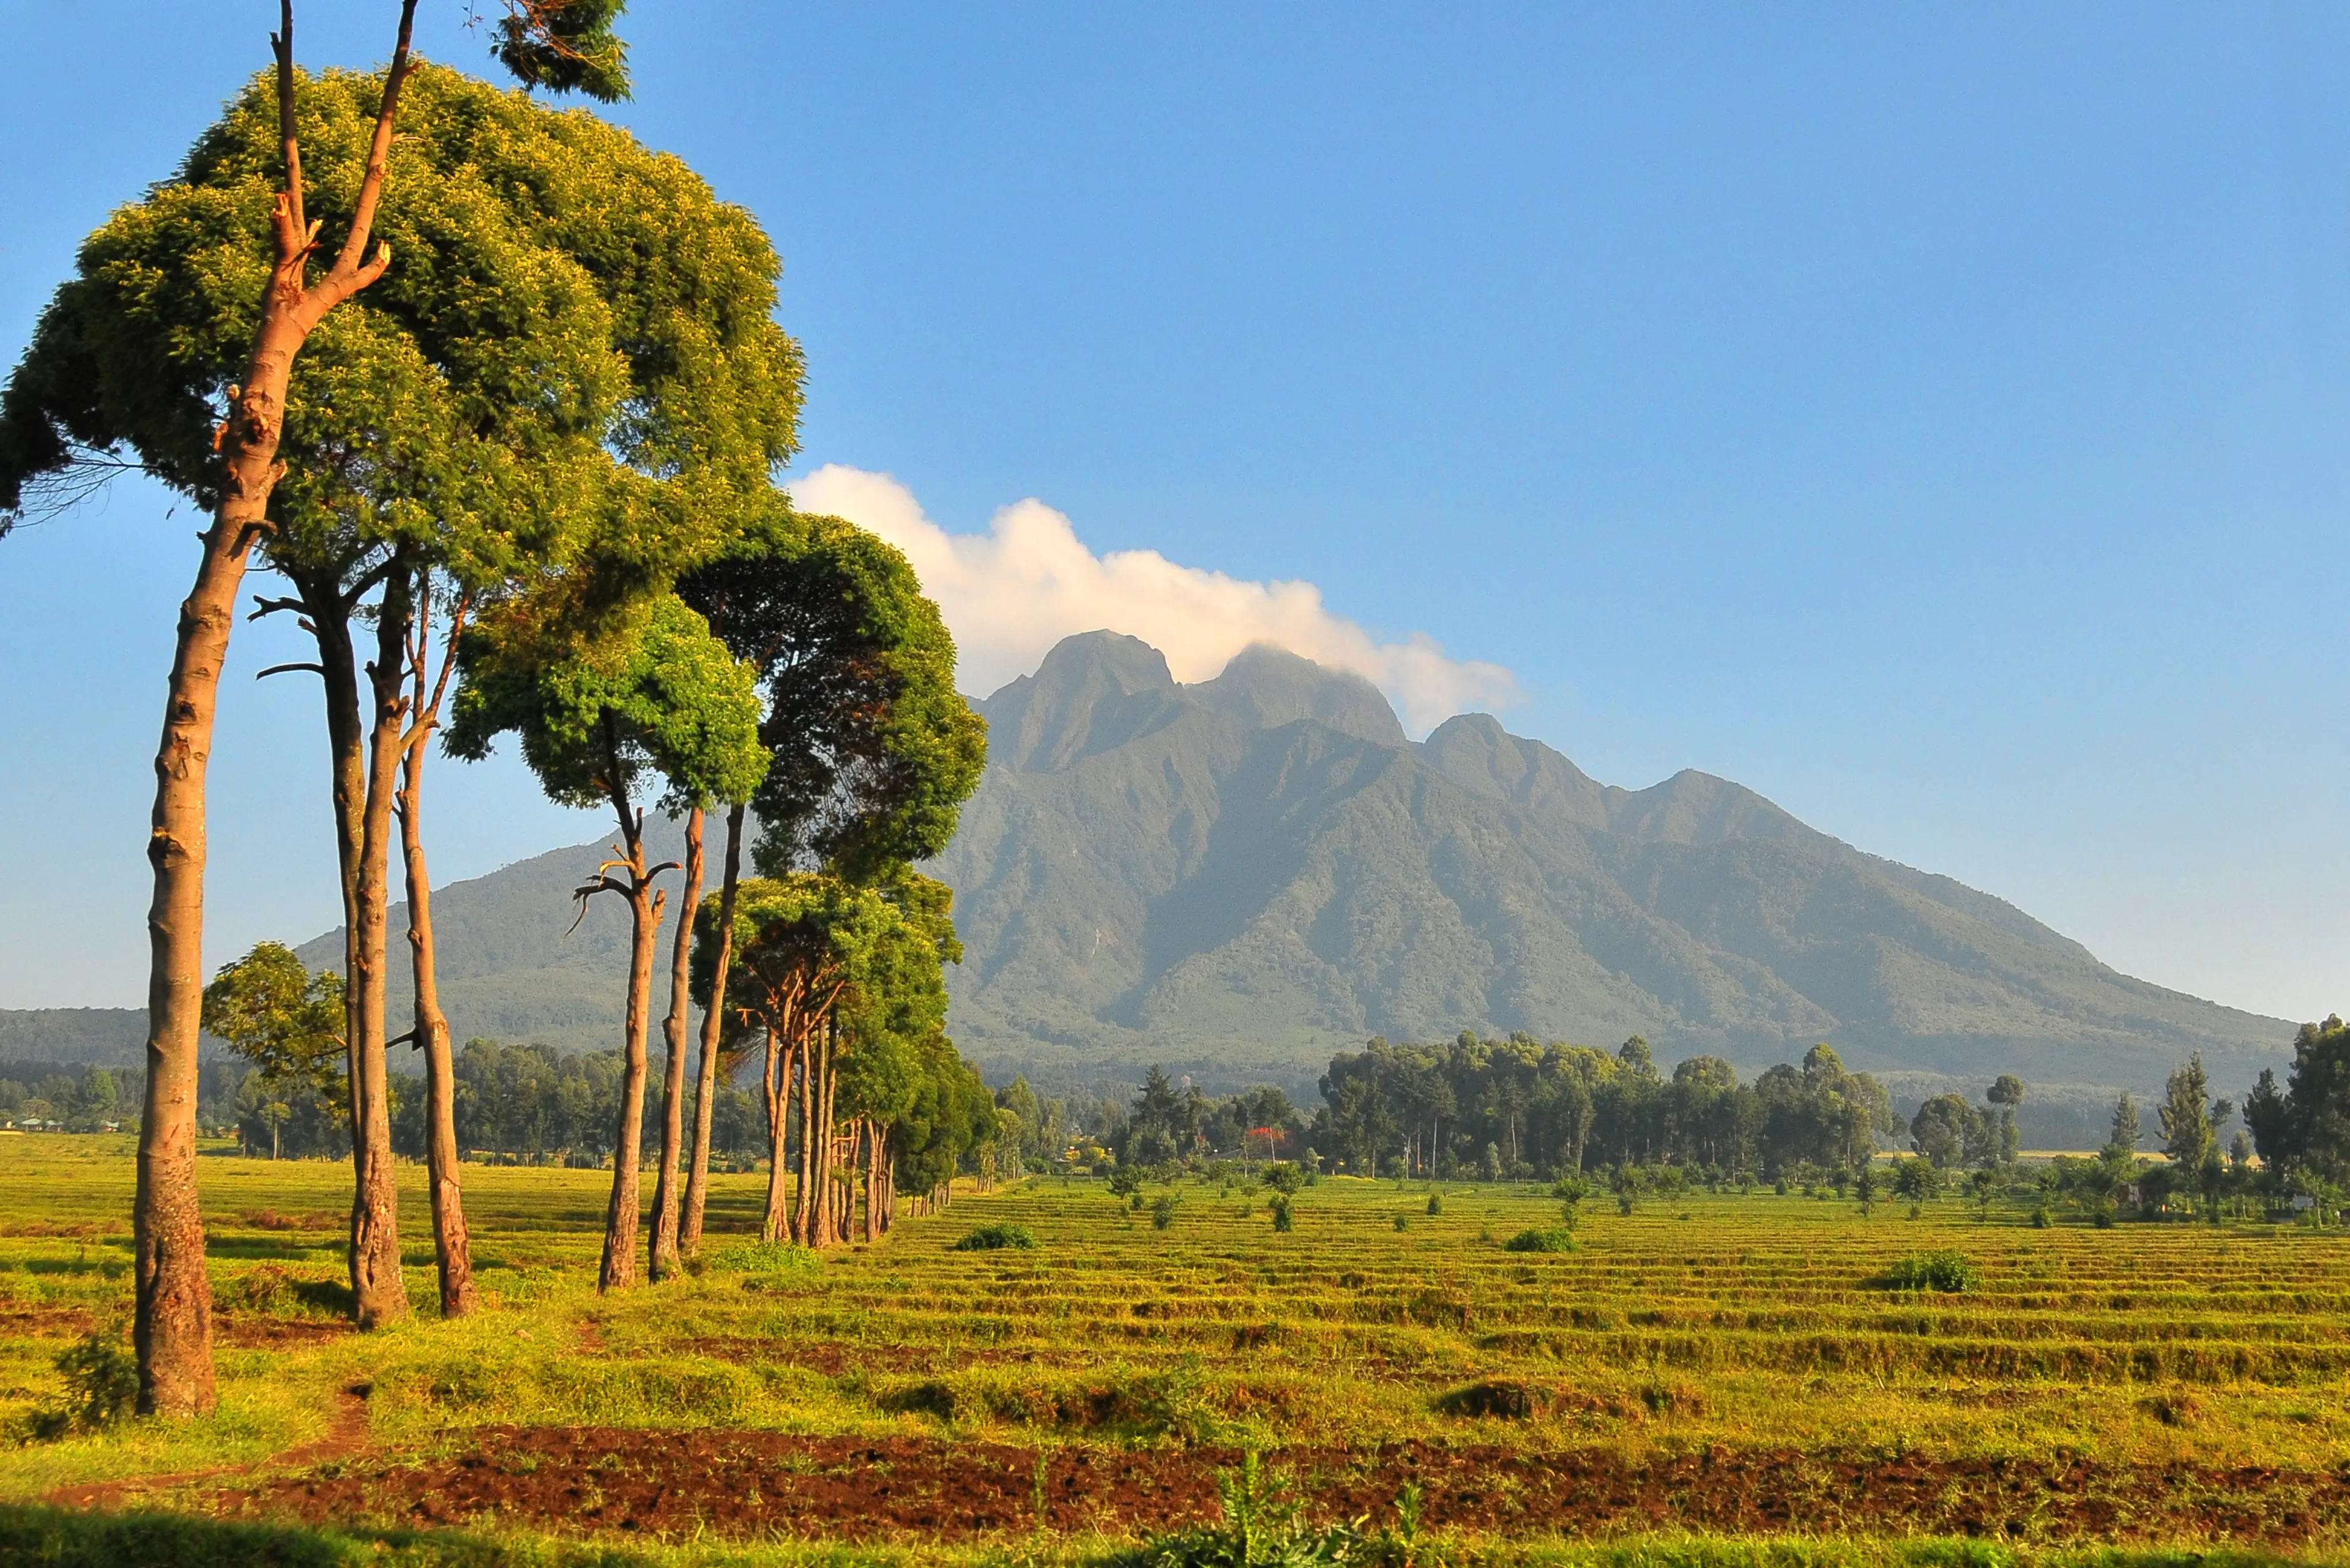 View of the Virunga mountain